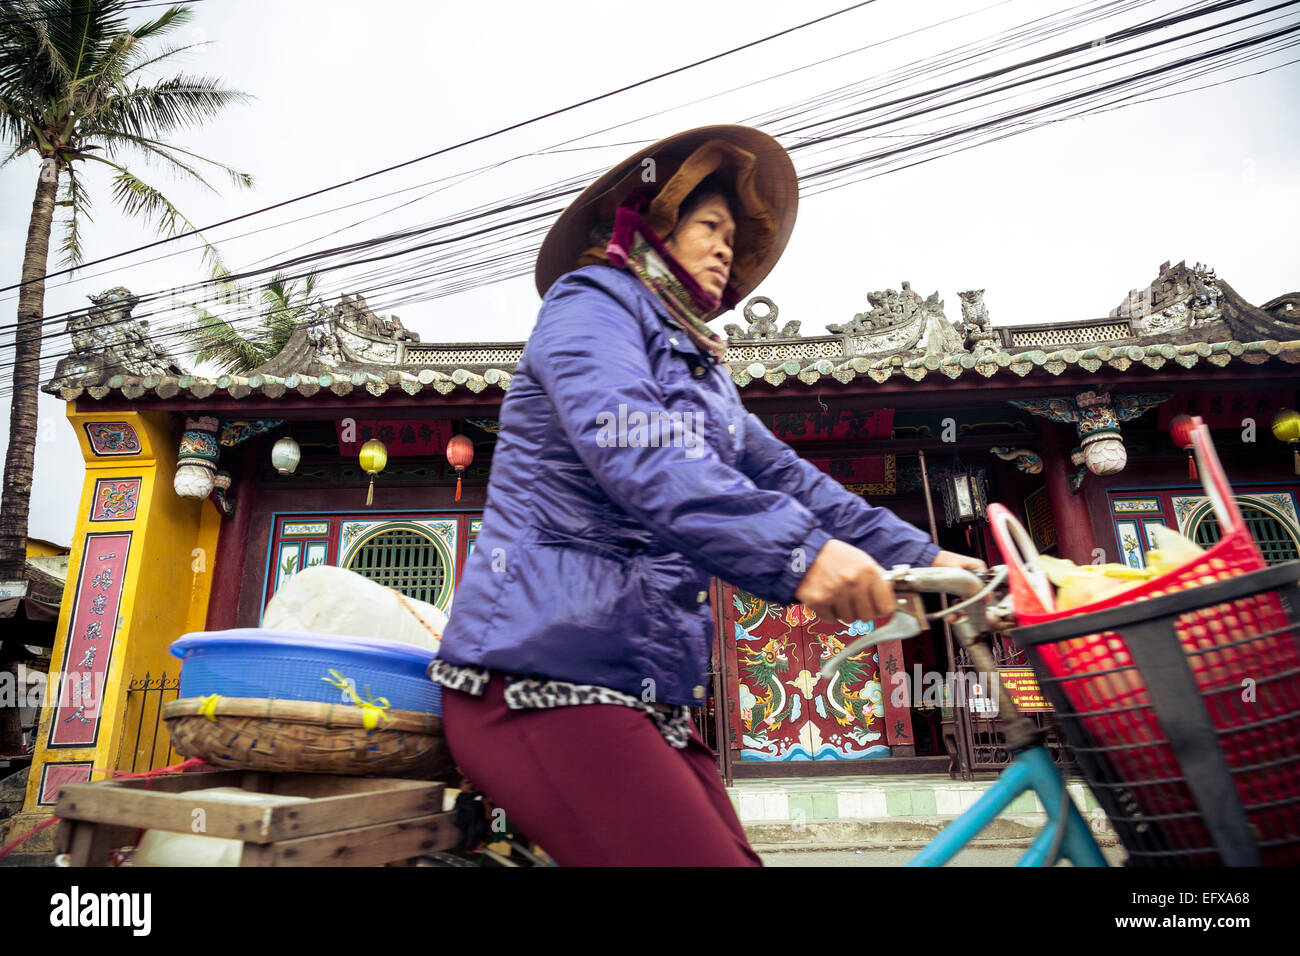 Donna Bicicletta Equitazione dalla Quan Cong tempio (Chua ONGS), Hoi An, Vietnam. Foto Stock